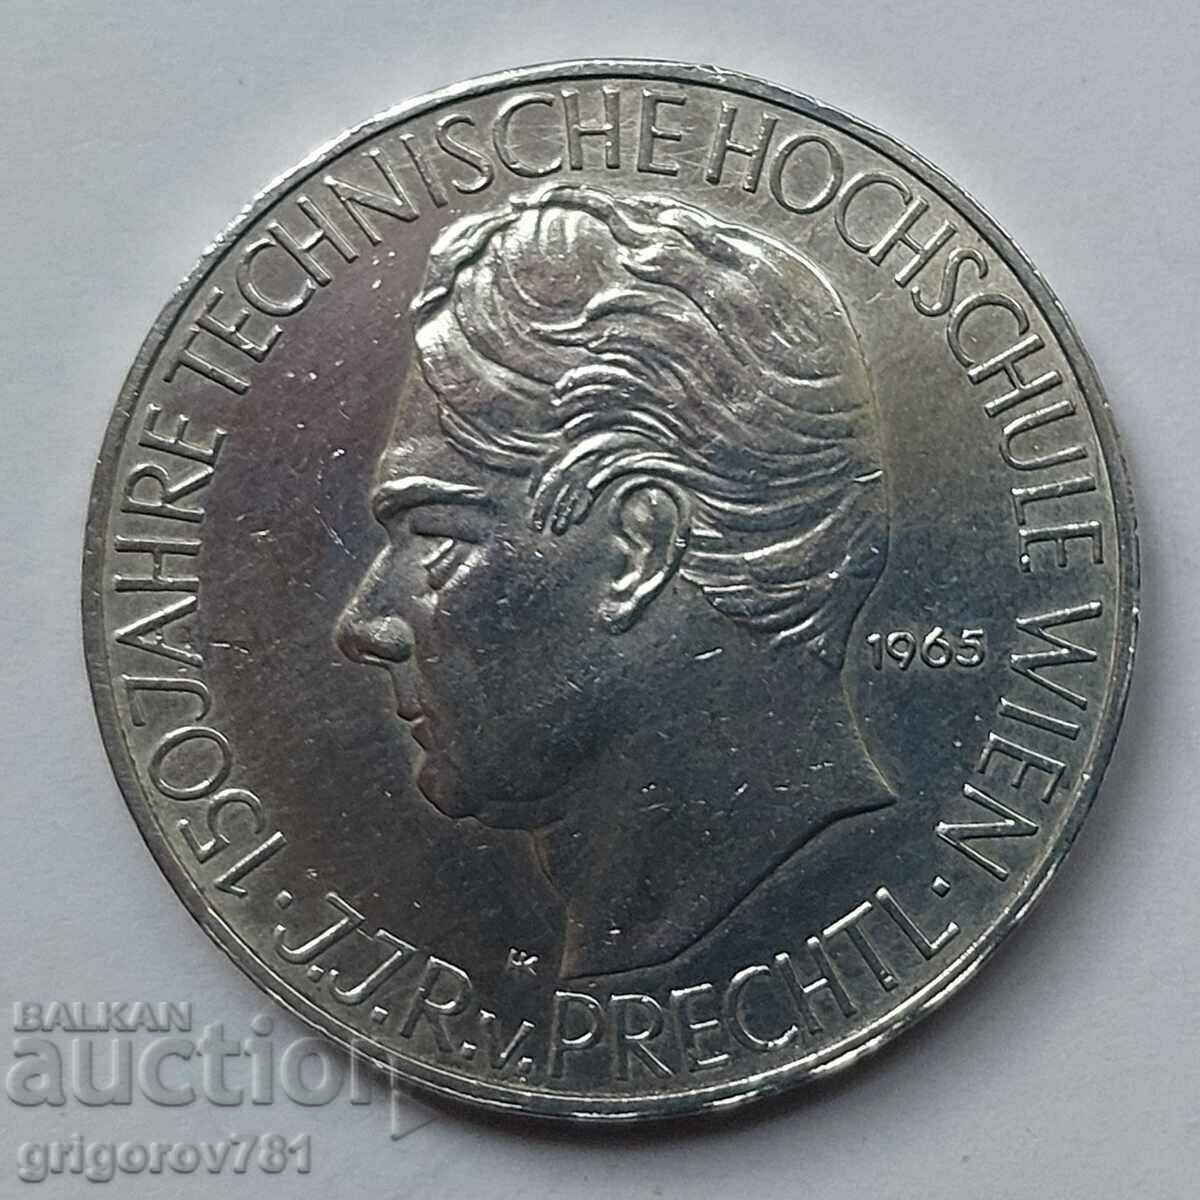 25 Shilling Silver Austria 1965 - Silver Coin #26